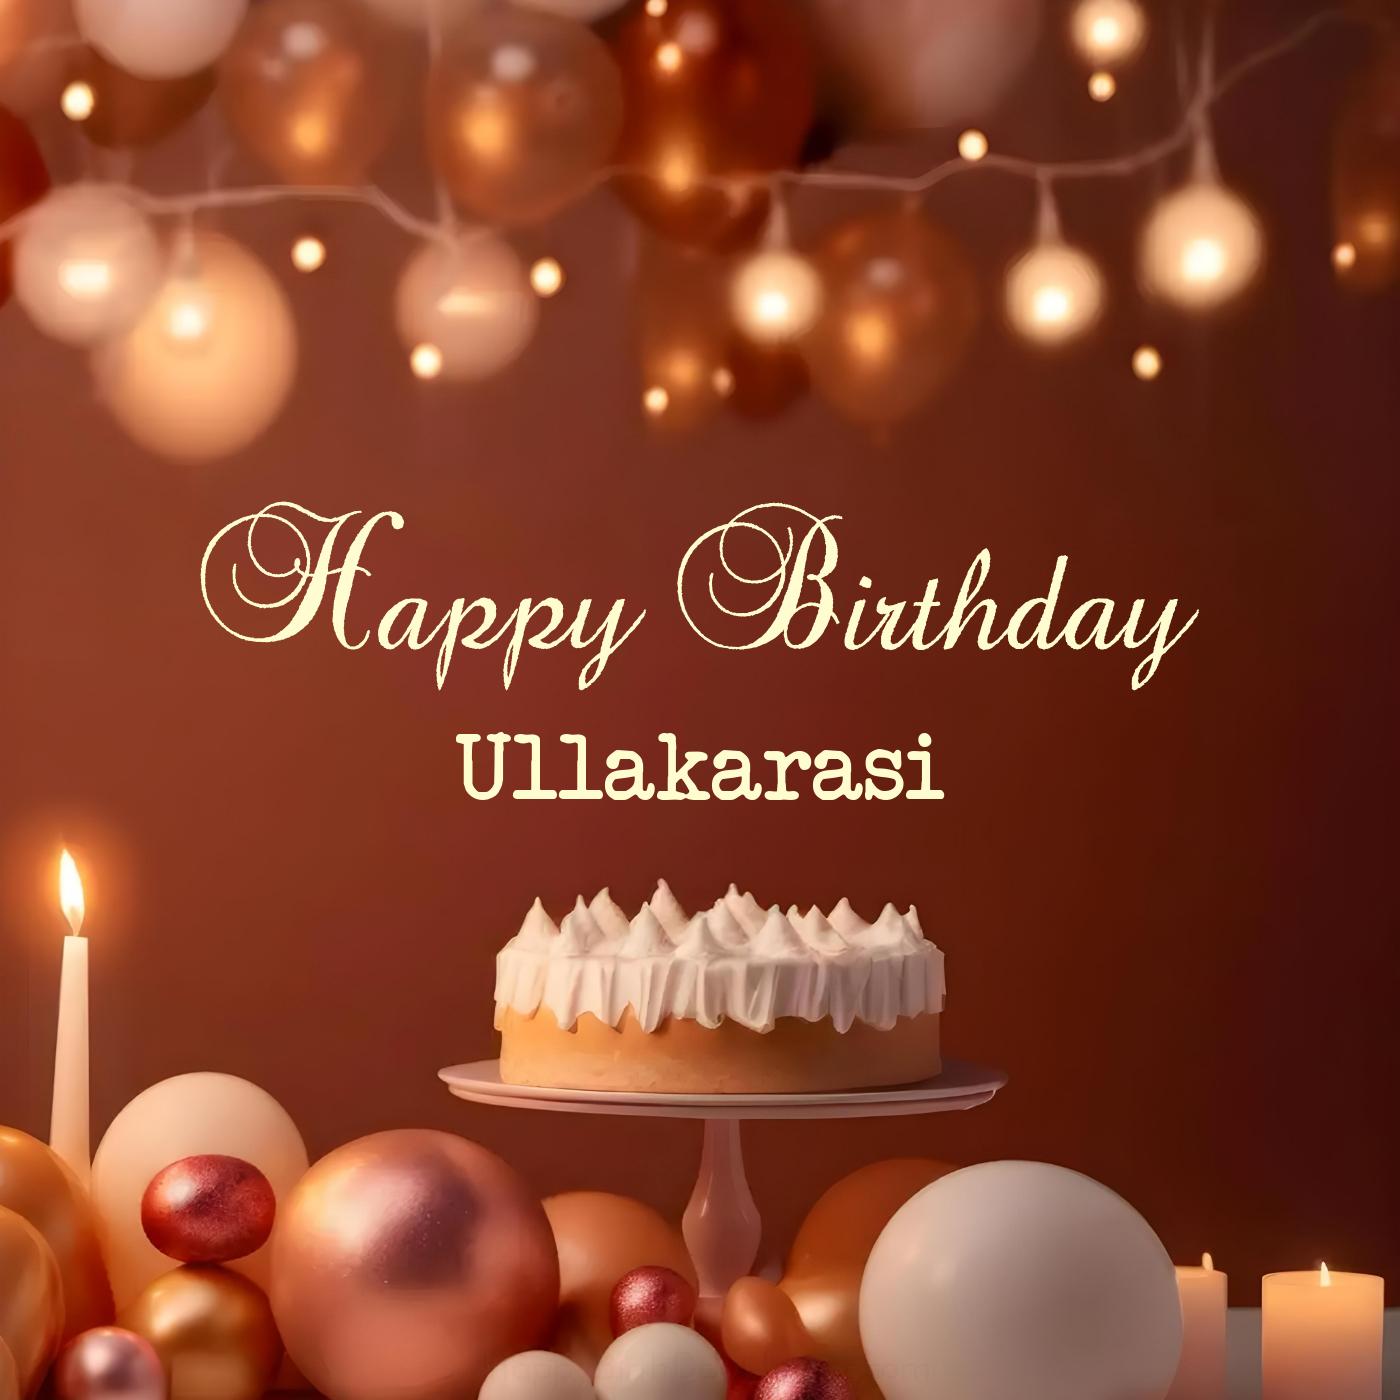 Happy Birthday Ullakarasi Cake Candles Card